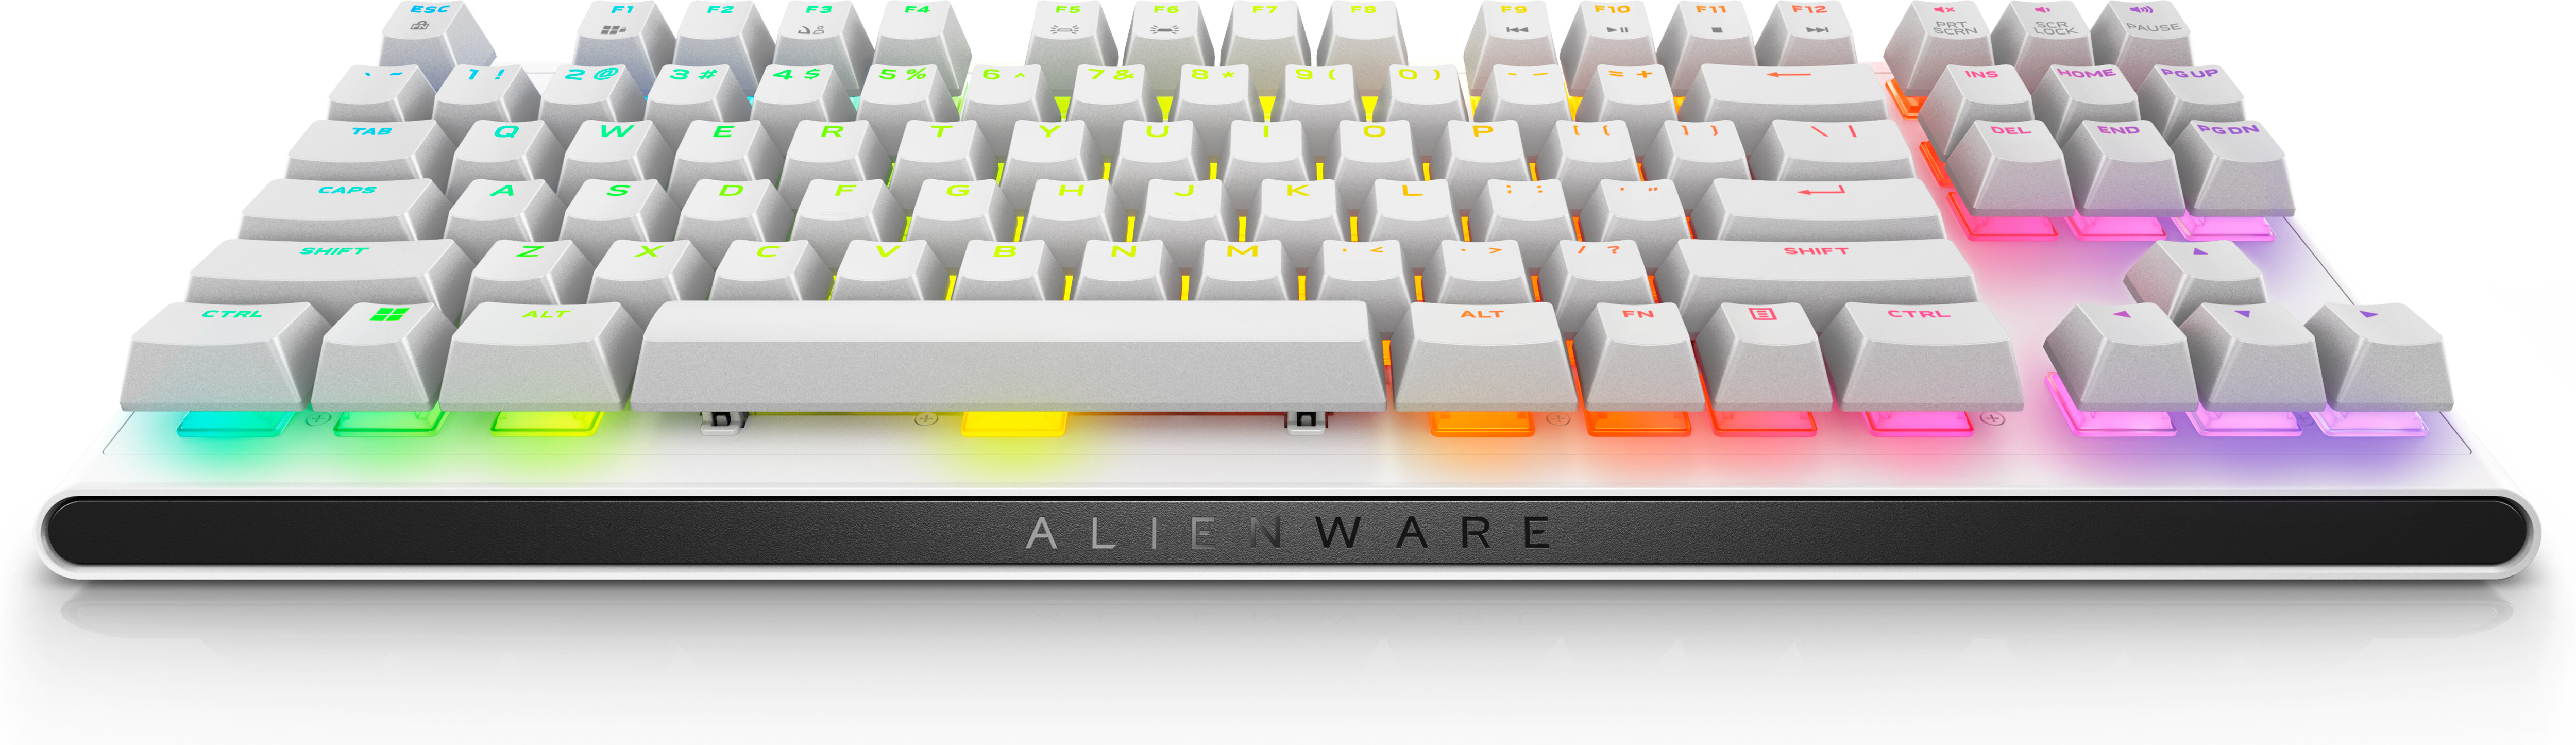 Alienware Upgrades Flagship Desktop, Reveals Tenkeyless Keyboard